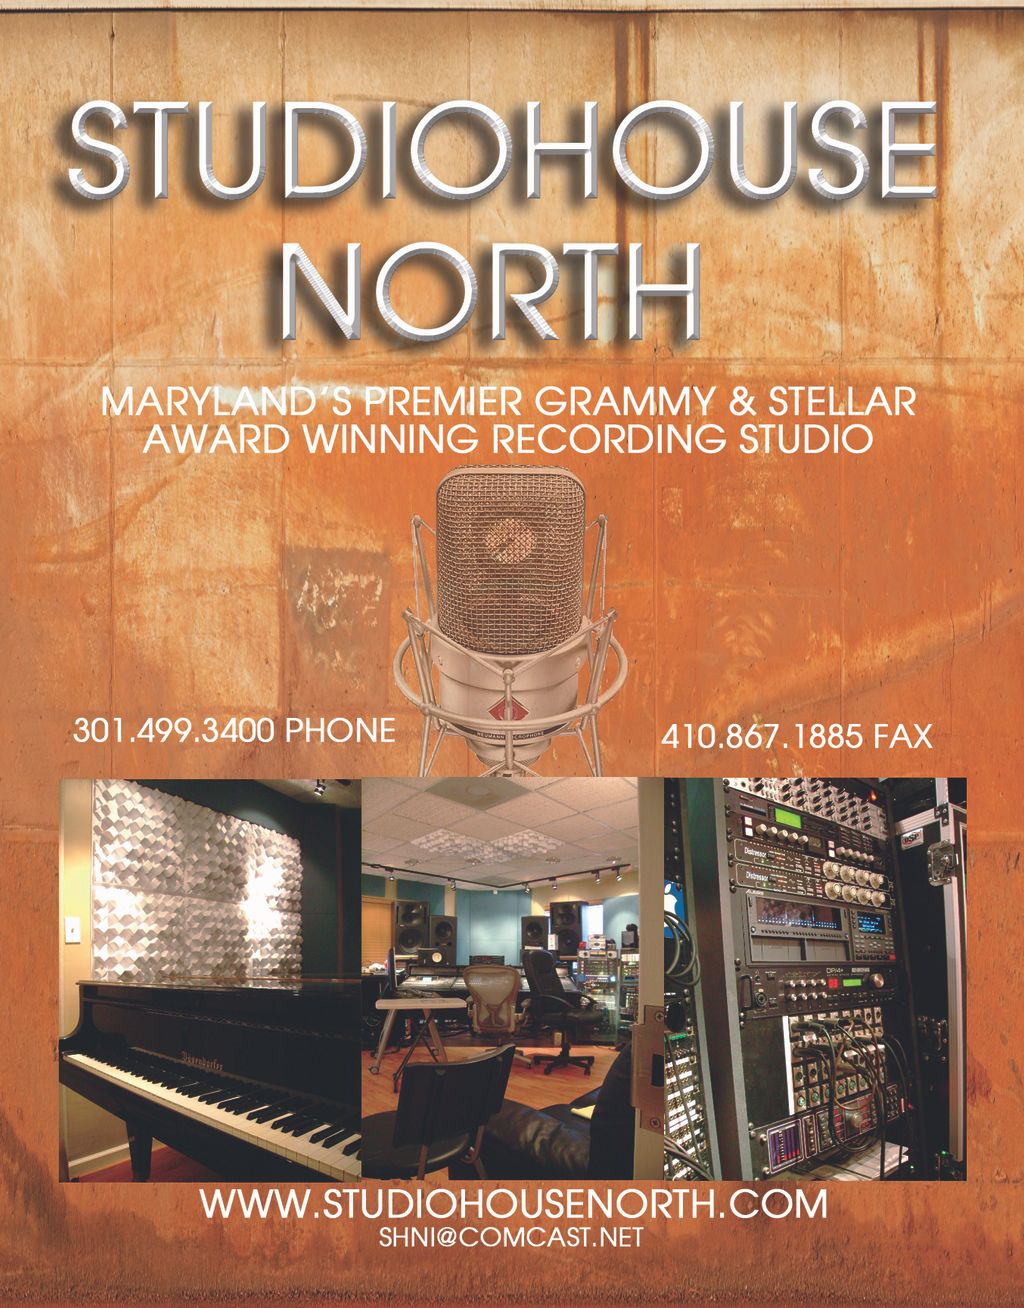 Studiohouse North